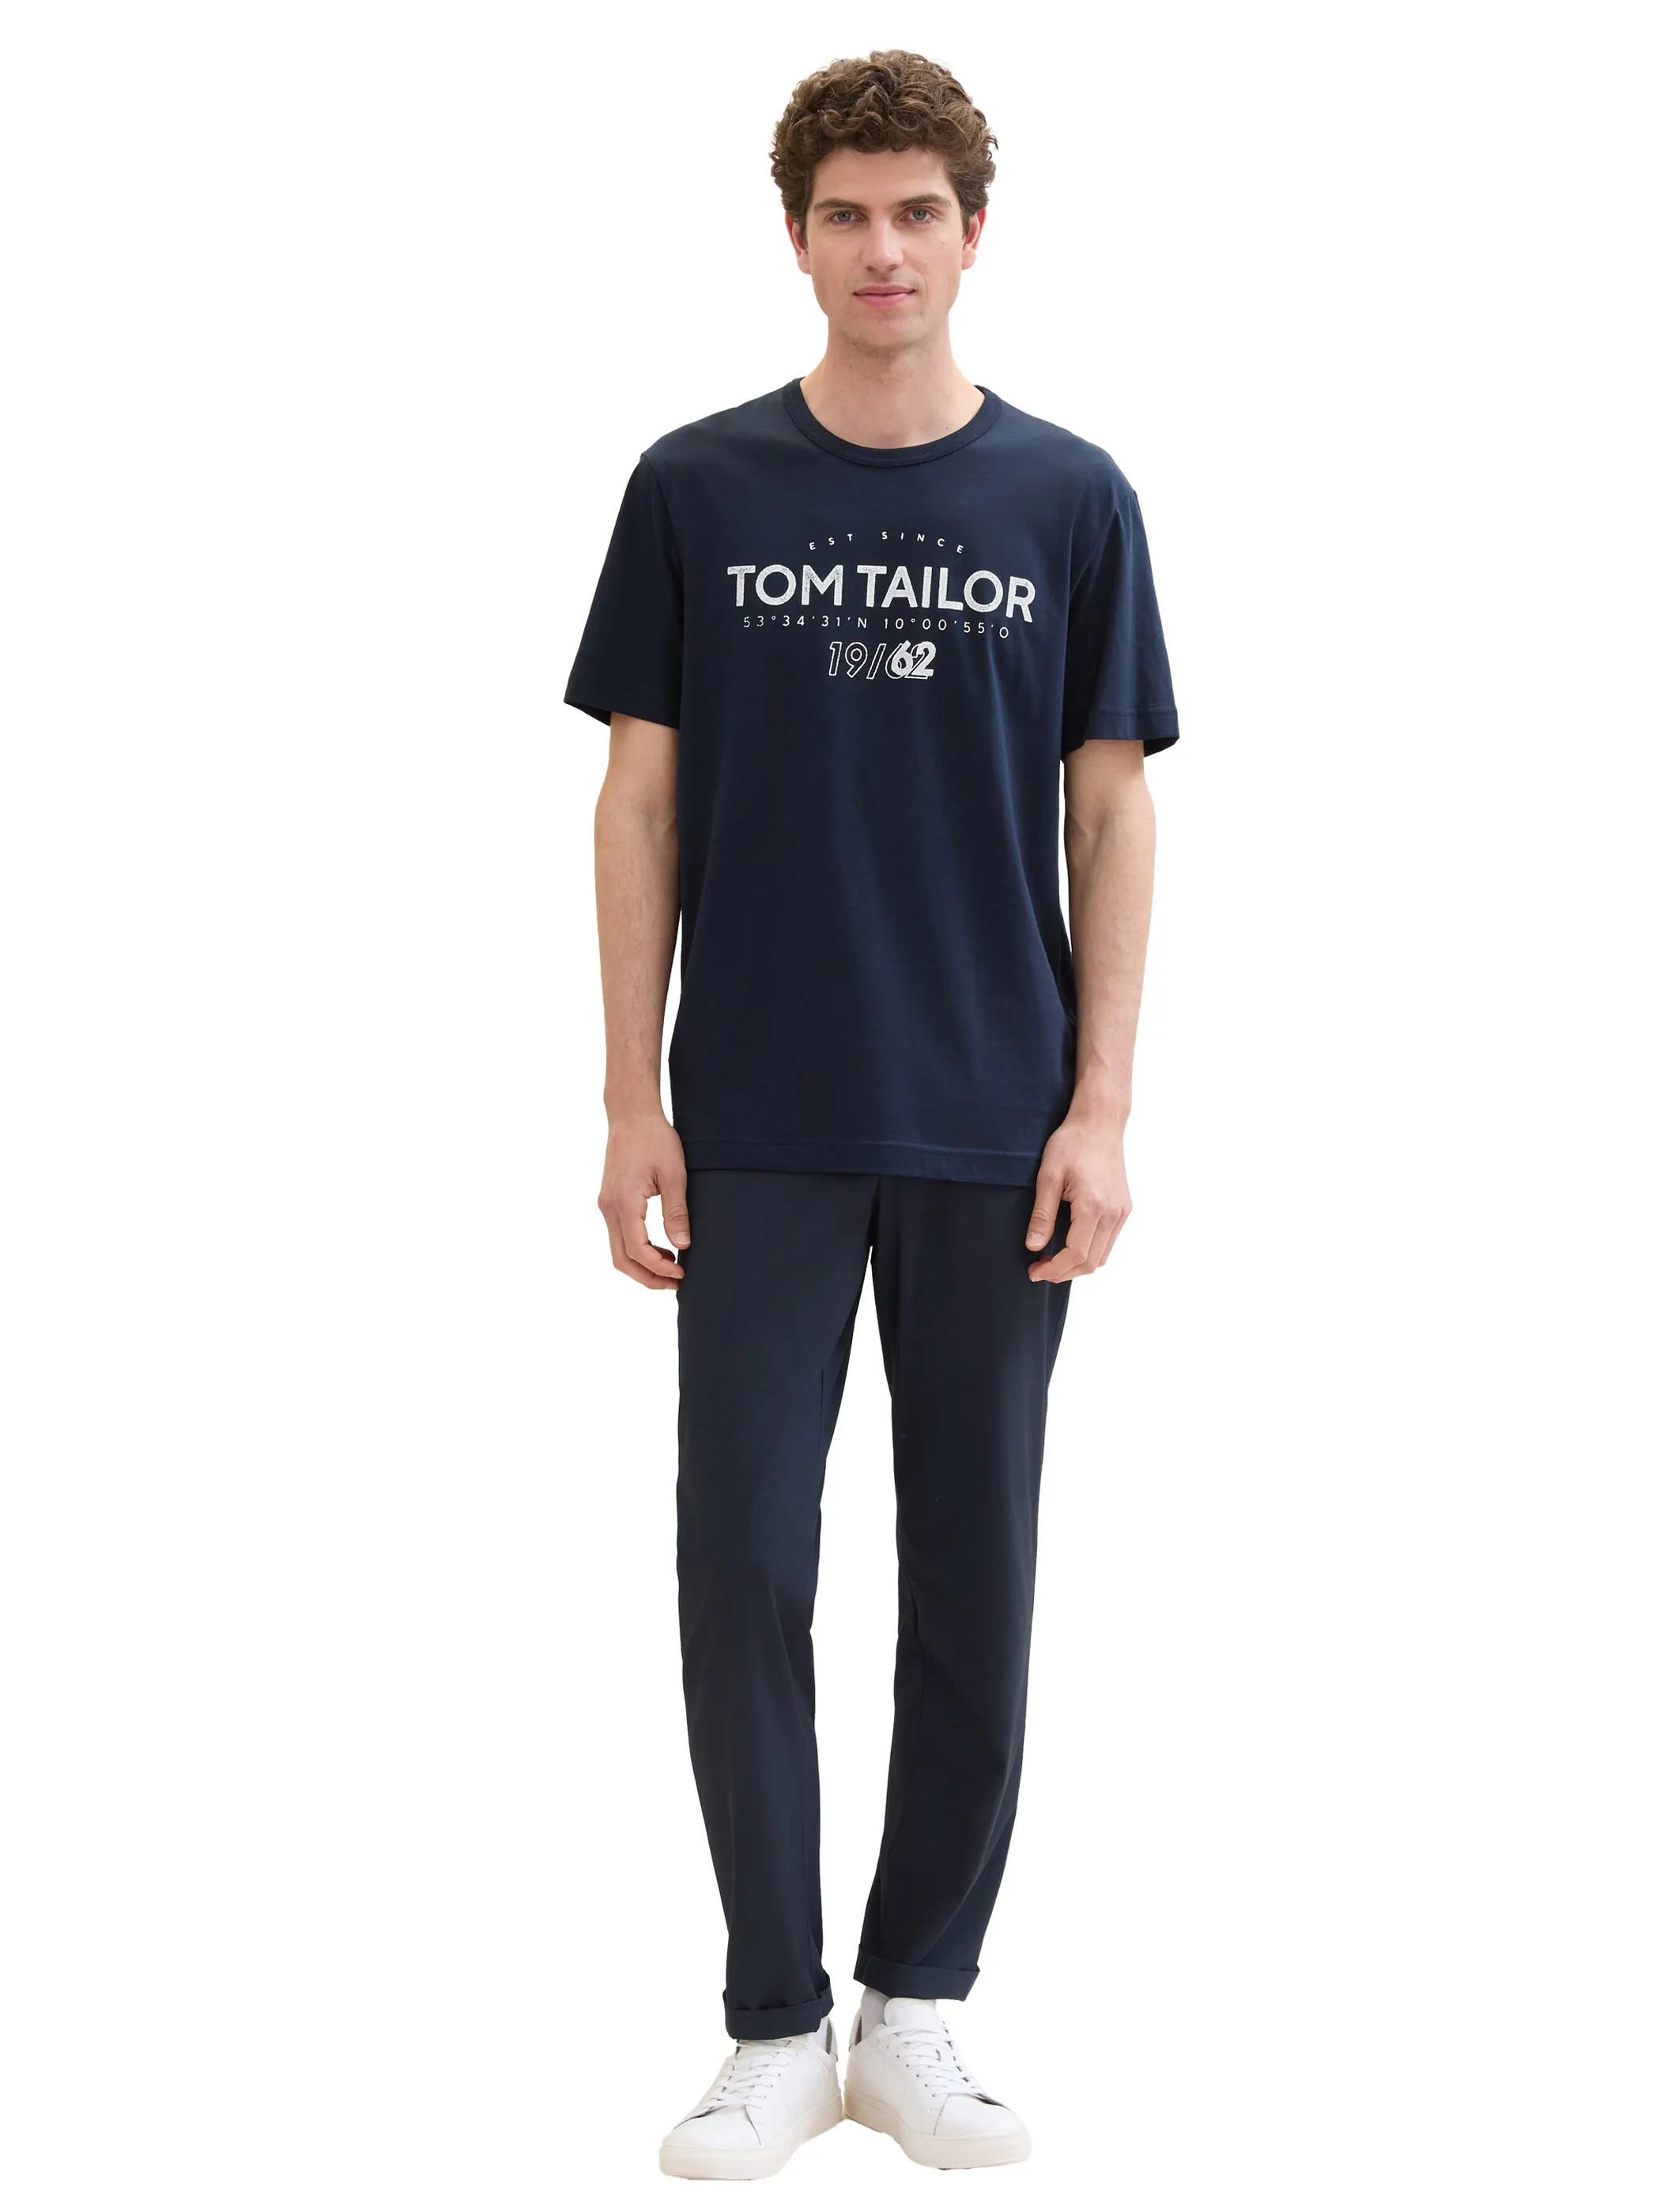 Tom Tailor 1041871 printed t-shirt Blau 895641 10302 4